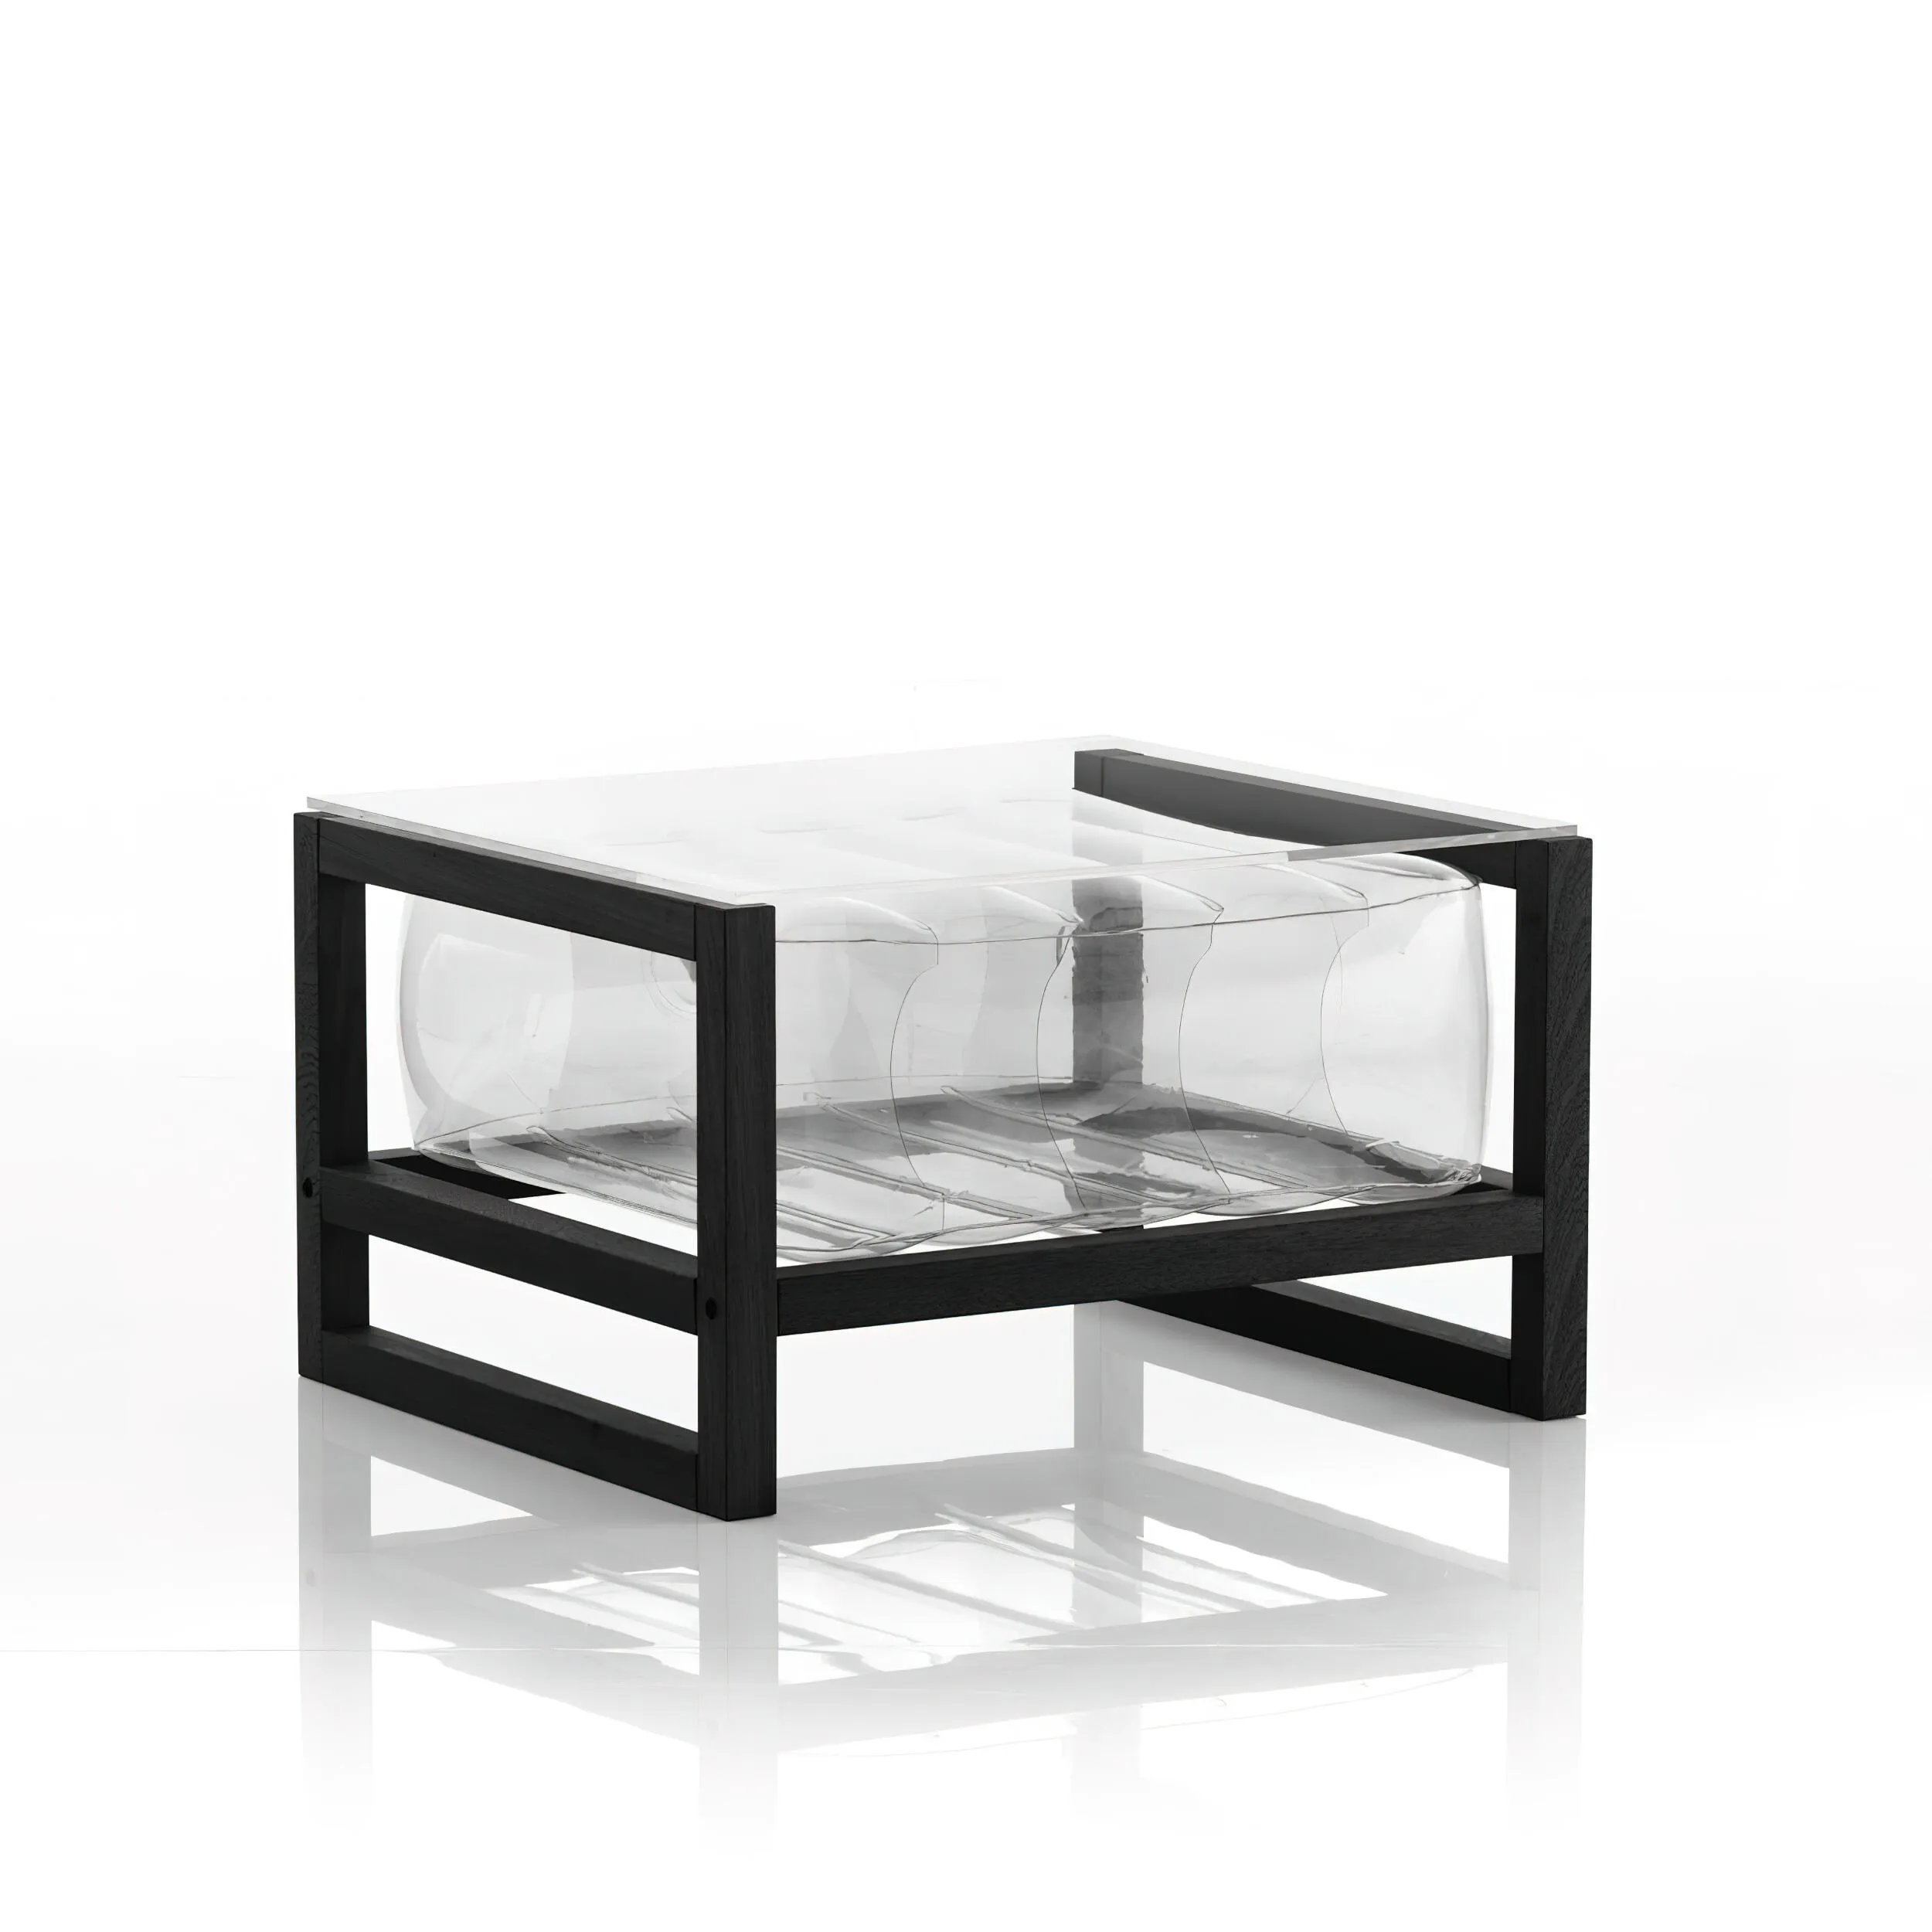 tavolino da salotto Yoko eko struttura in legno nero, dimensioni 62x70xH40 cm peso 14 kg, seduta gonfiabile in TPU colore trasparente